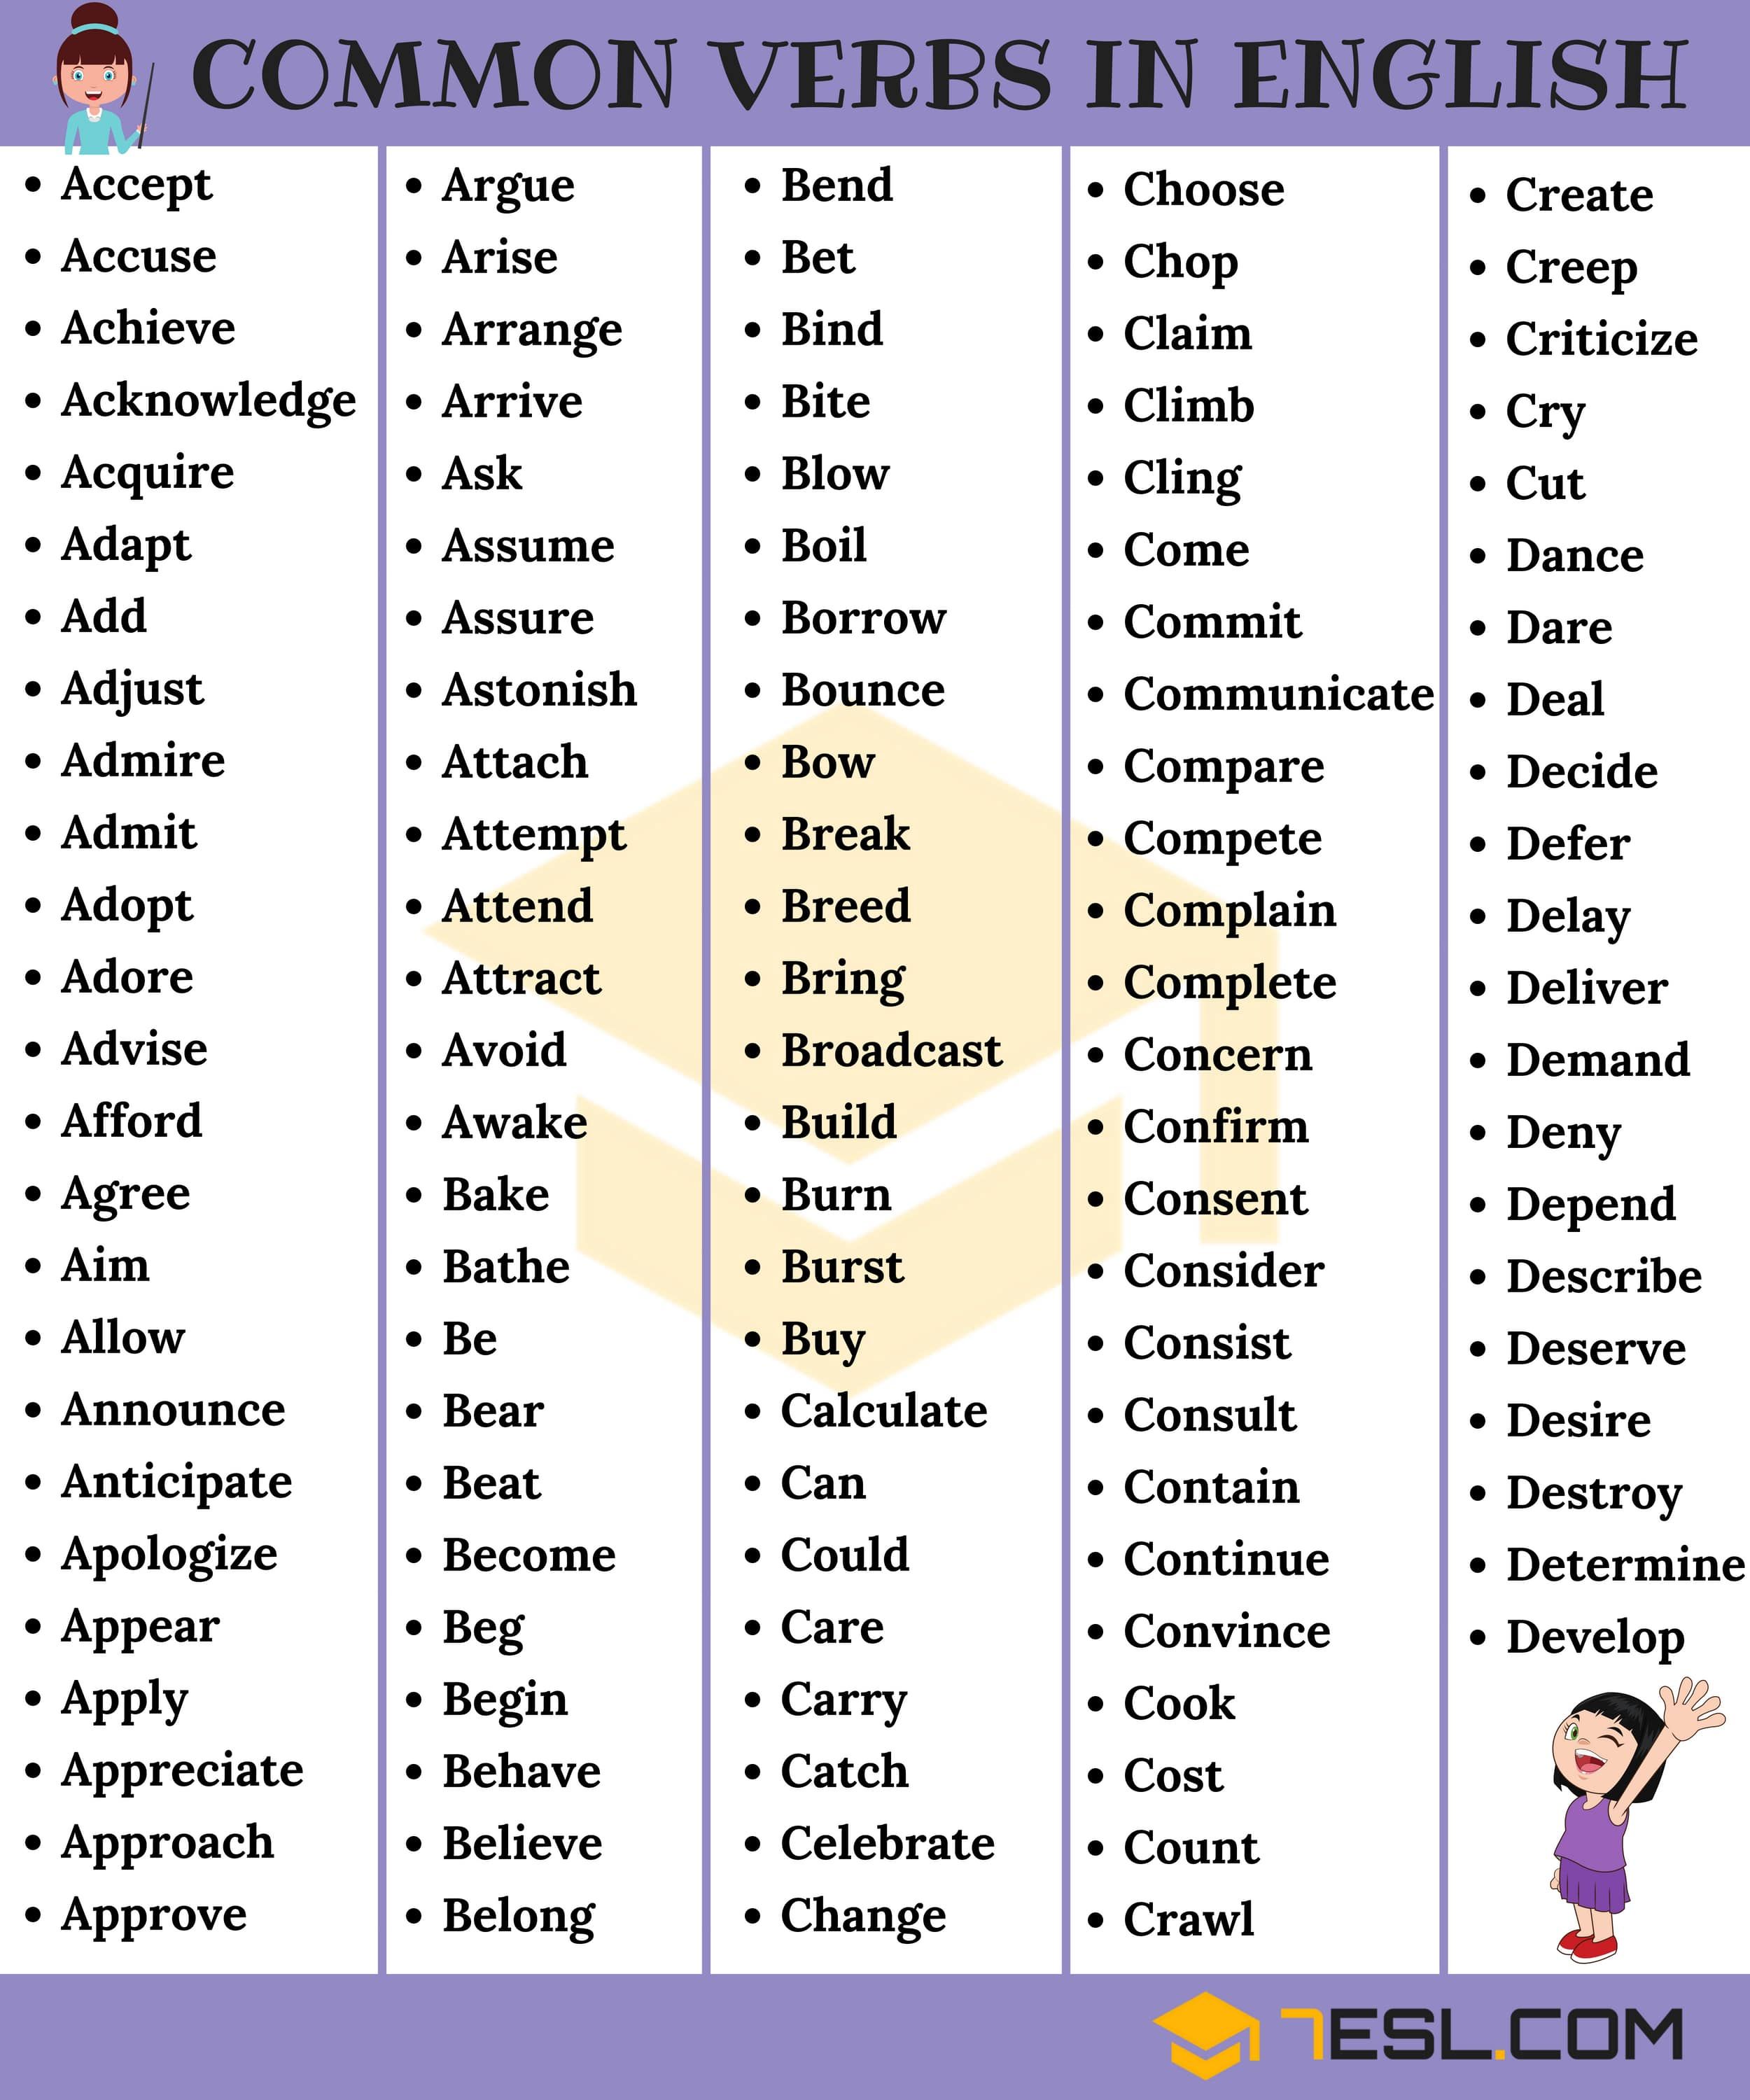 100 examples of regular verbs